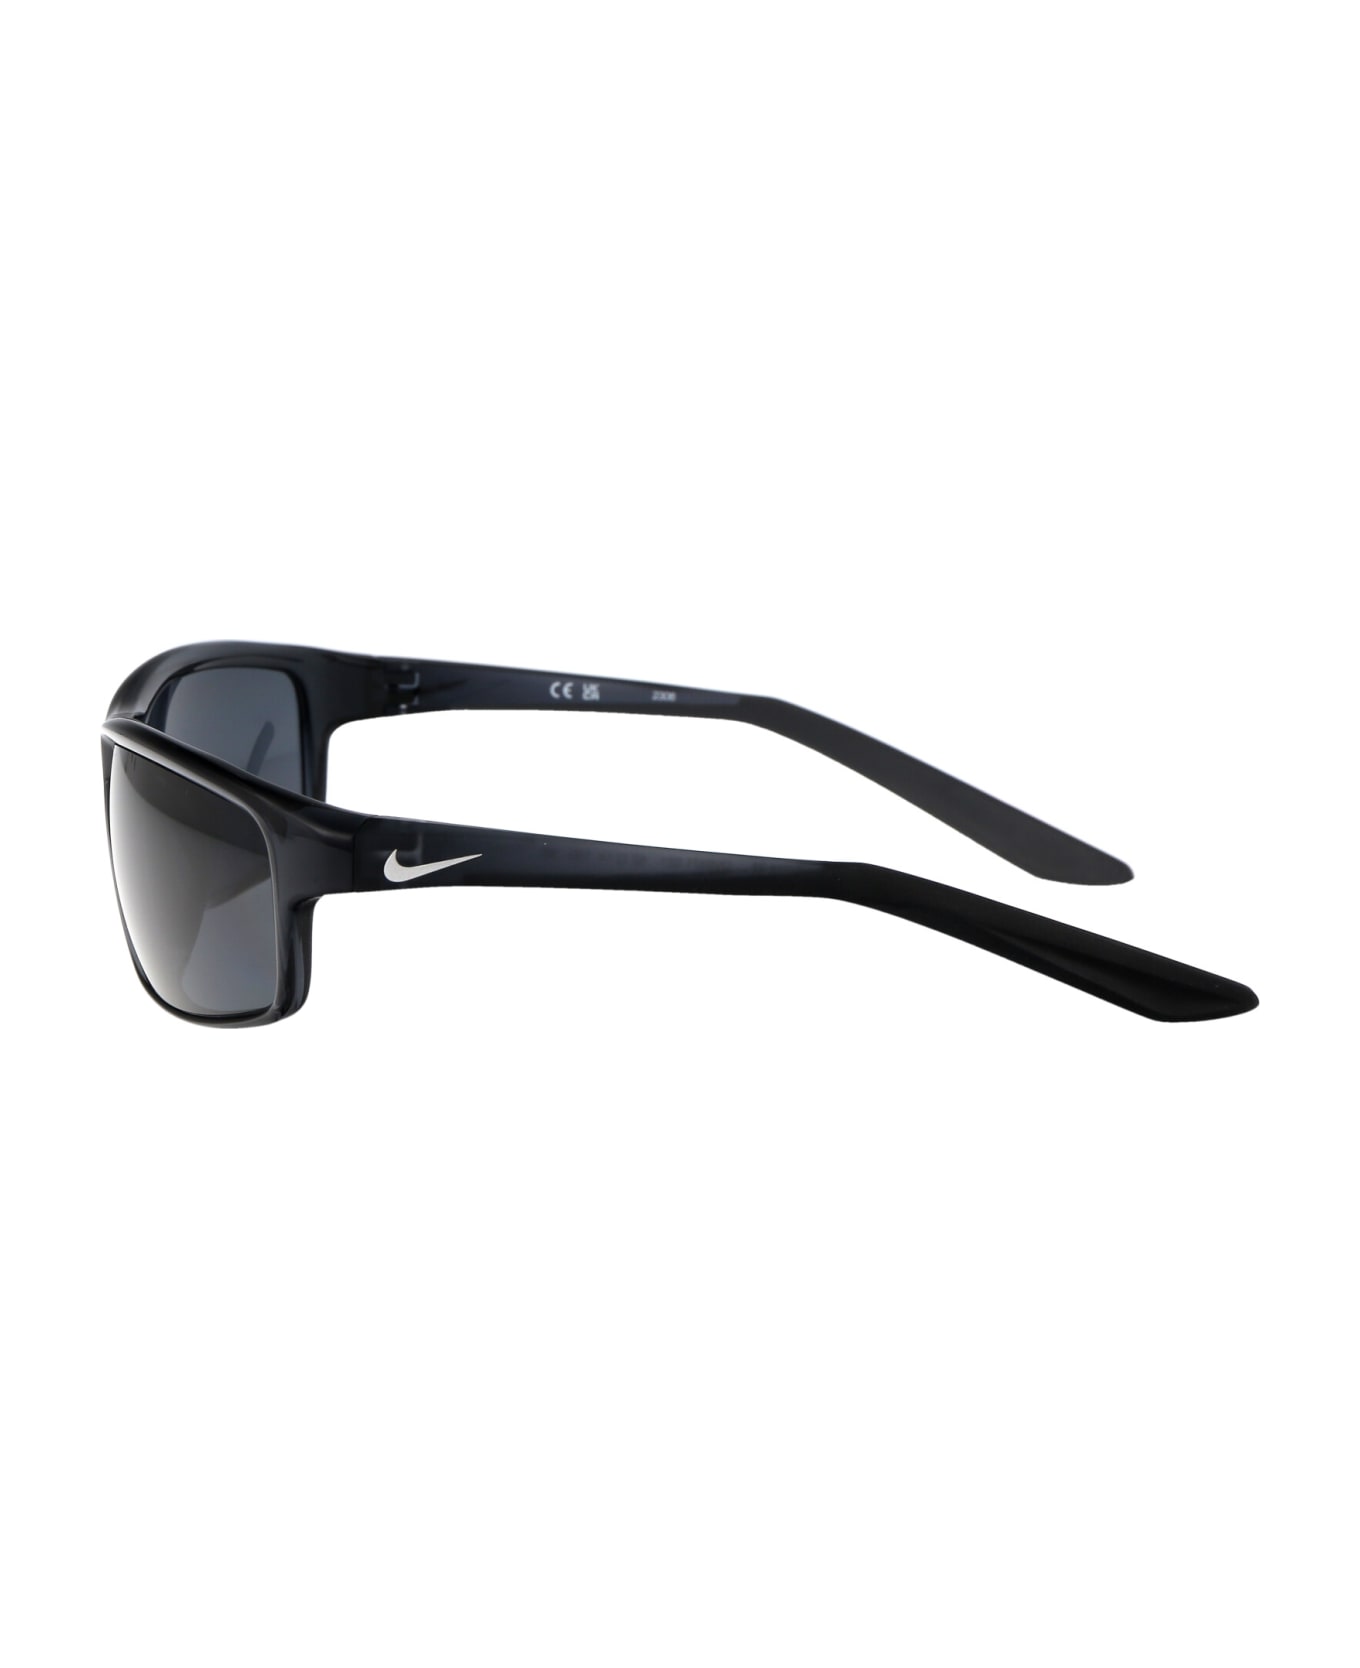 Nike Rabid 22 Sunglasses - 021 GREY DARK GREY サングラス